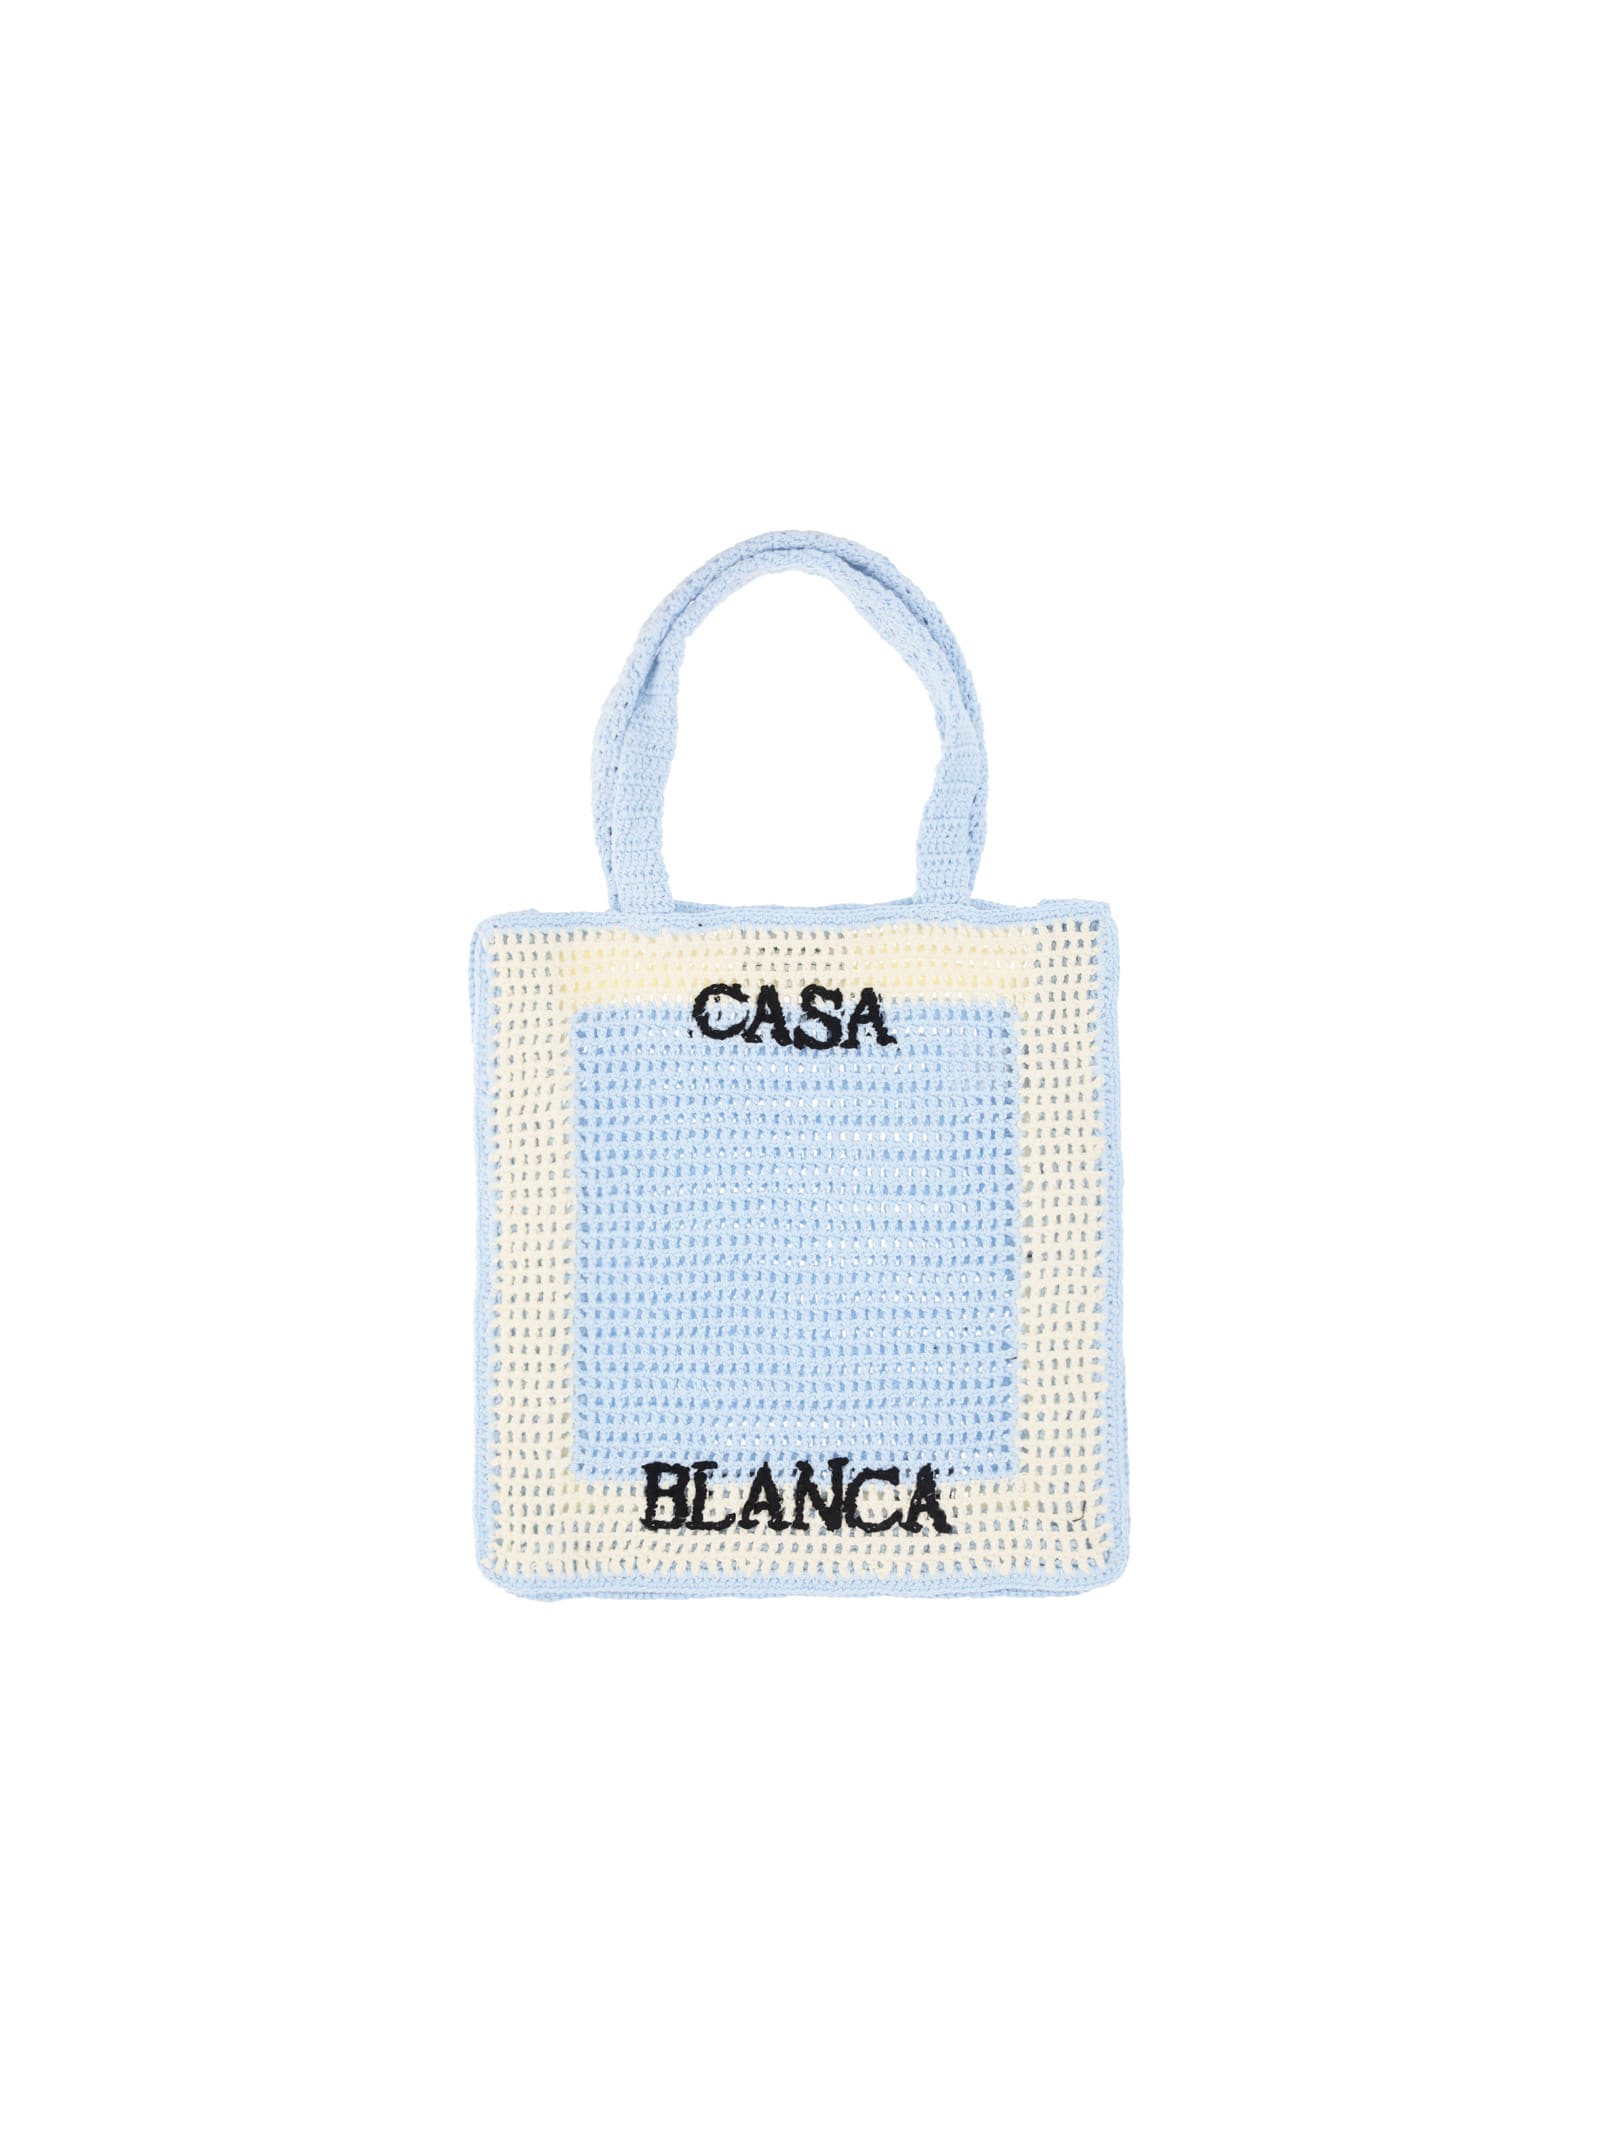 Casablanca Brand Crochet Bag